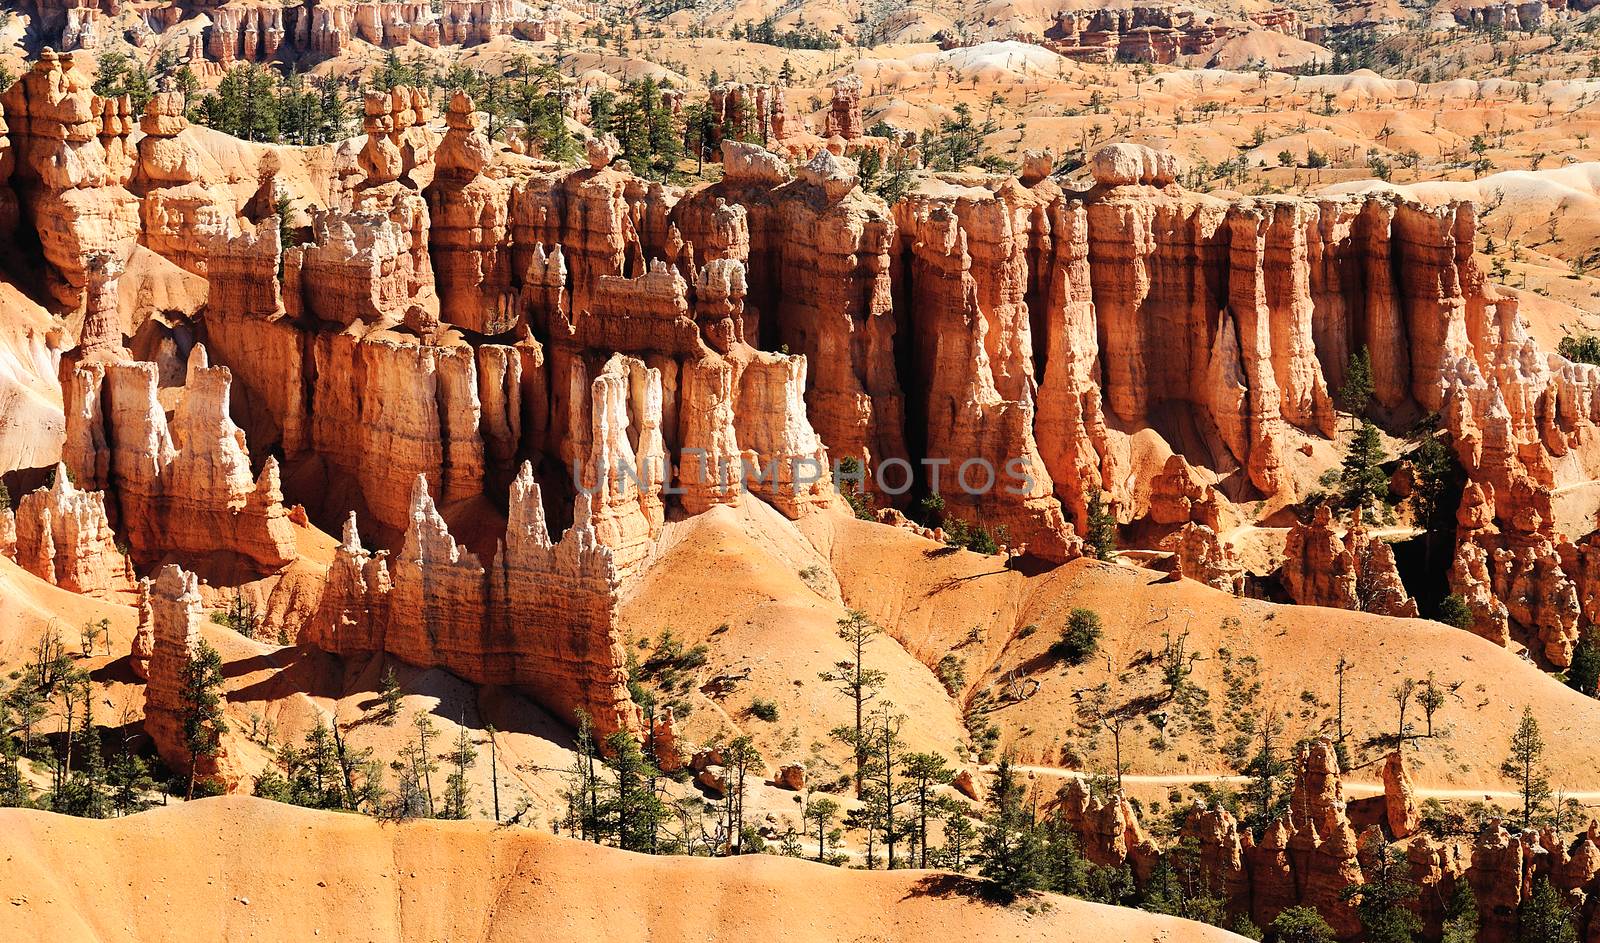 spectacular Hoodoo rock spires of Bryce Canyon, Utah, USA